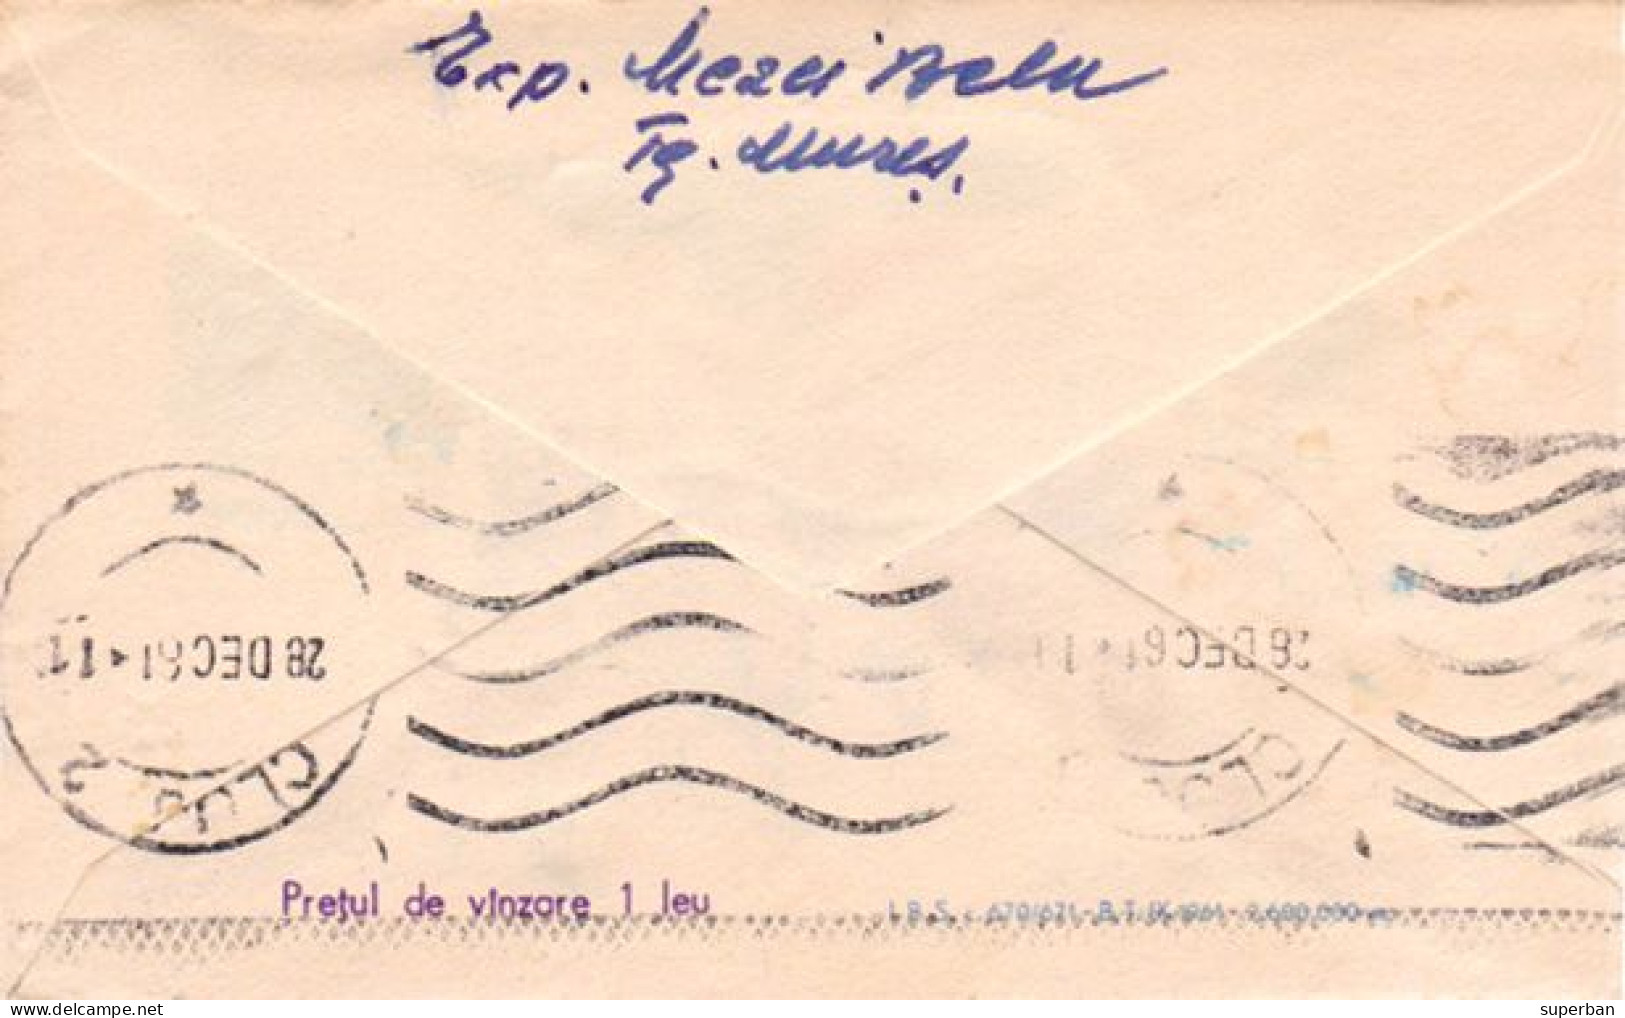 STATIONERY / ENTIER POSTAL LILLIPUTIEN ( ~ 6,5 X 10,5  CM ) - CAPRIOR / CHVREUIL Et POUPÉE / ROEBUCK ~ 1961 (an672) - Postal Stationery